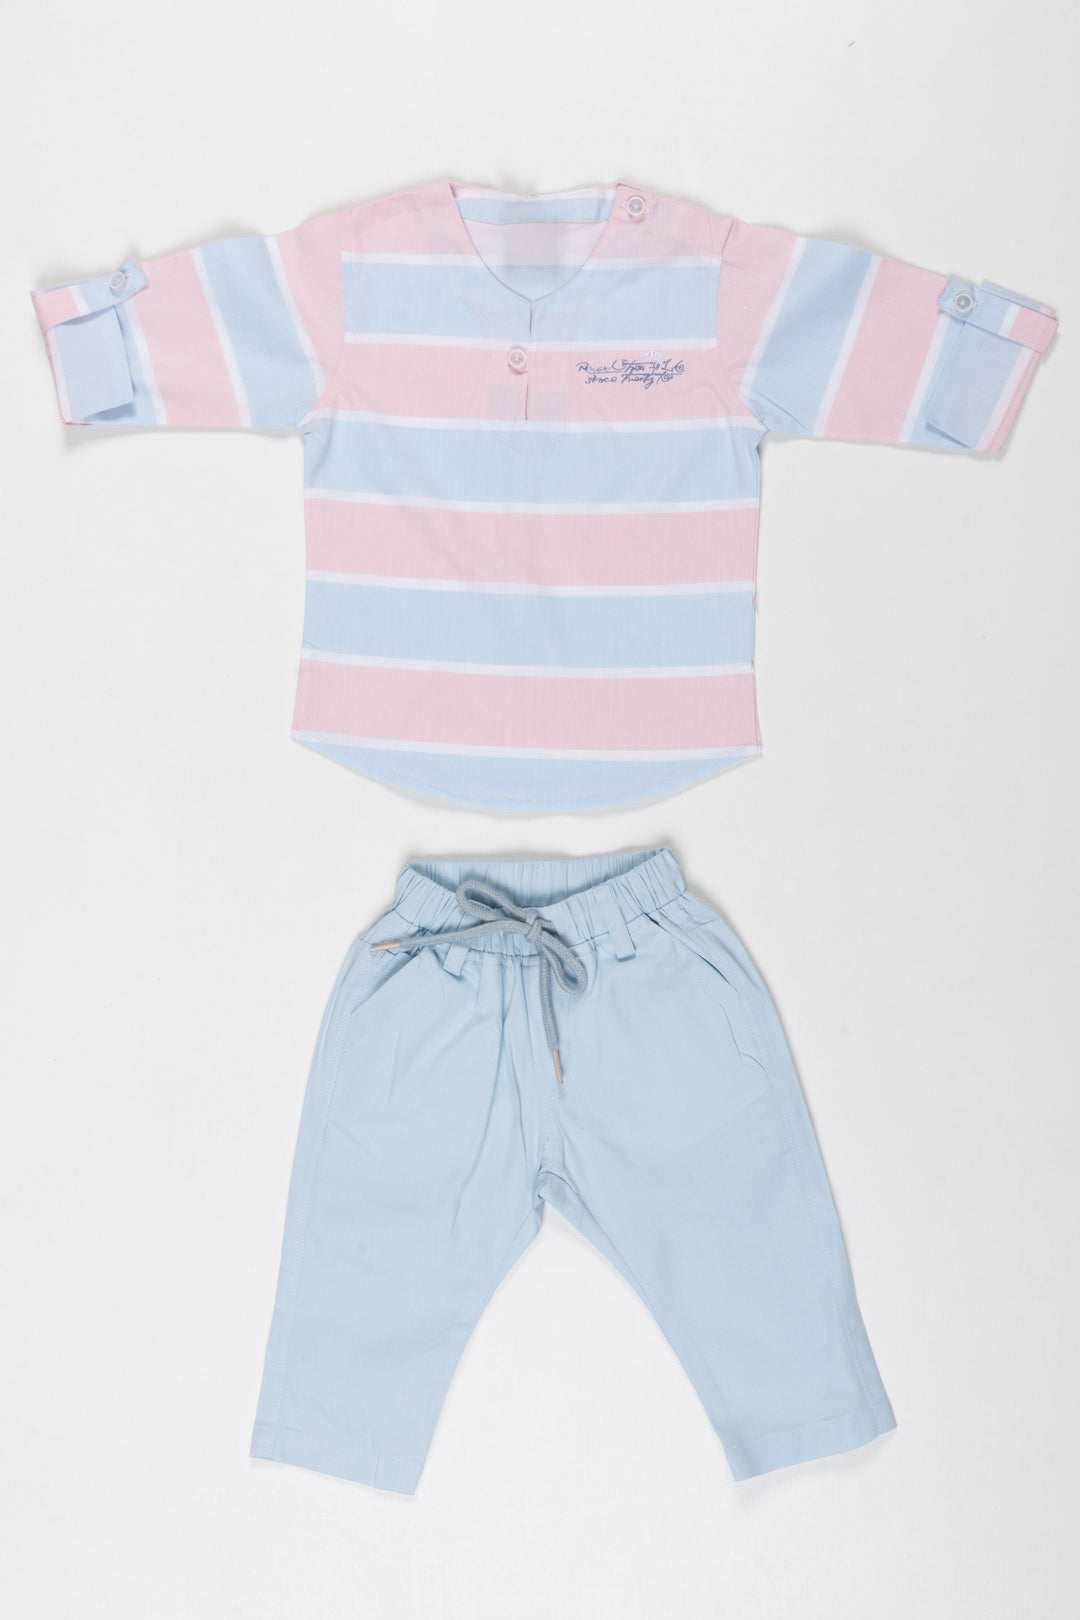 The Nesavu Boys Casual Set Pastel Perfection Boys T-Shirt and Pant Set Nesavu 12 (3M) / Pink / Cotton BCS023B-12 Soft Pastel Boys T Shirt and Pant Set | Stylish Kids Casual Wear | The Nesavu